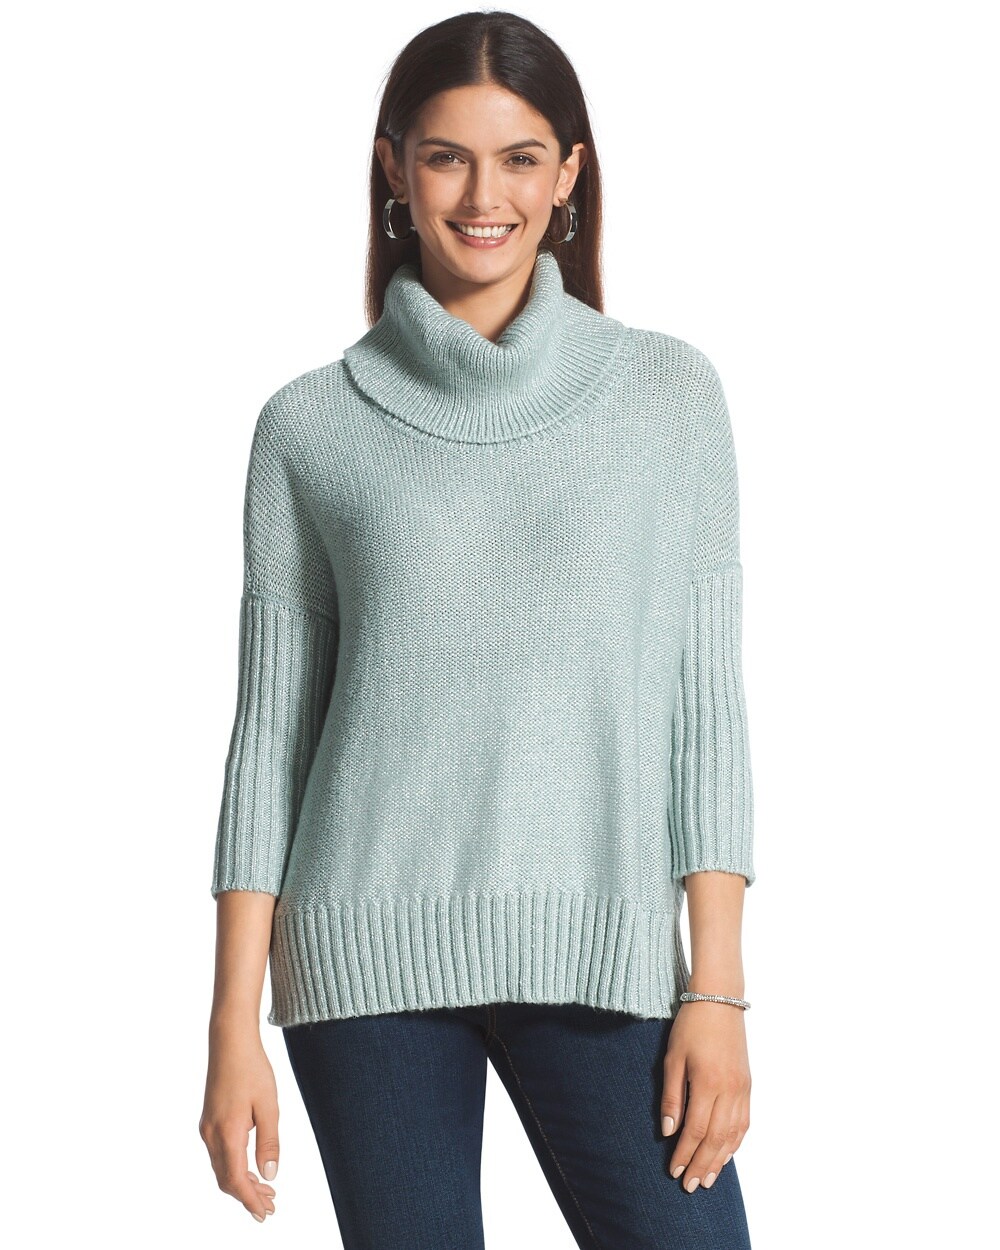 Celine Cowl Neck Sweater